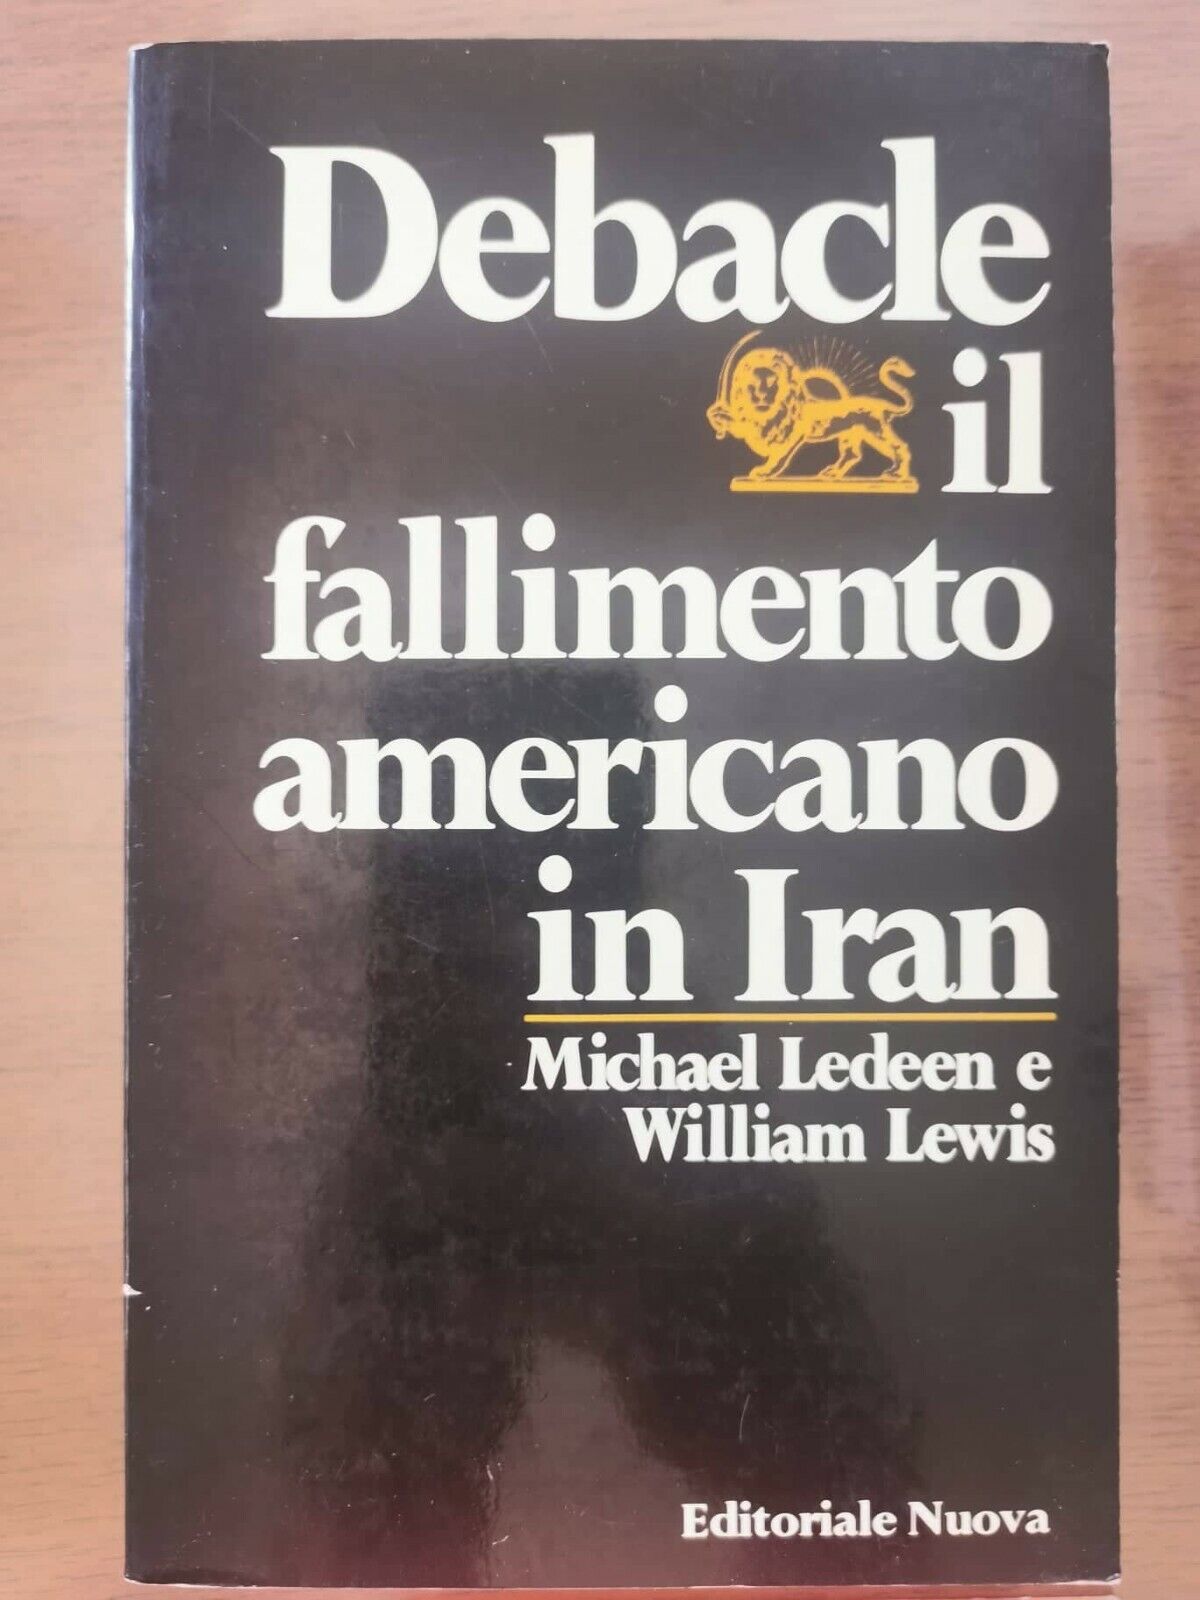 Debacle il fallimento americano in Iran - Ledeen/Lewis - Nuova - 1981 - AR